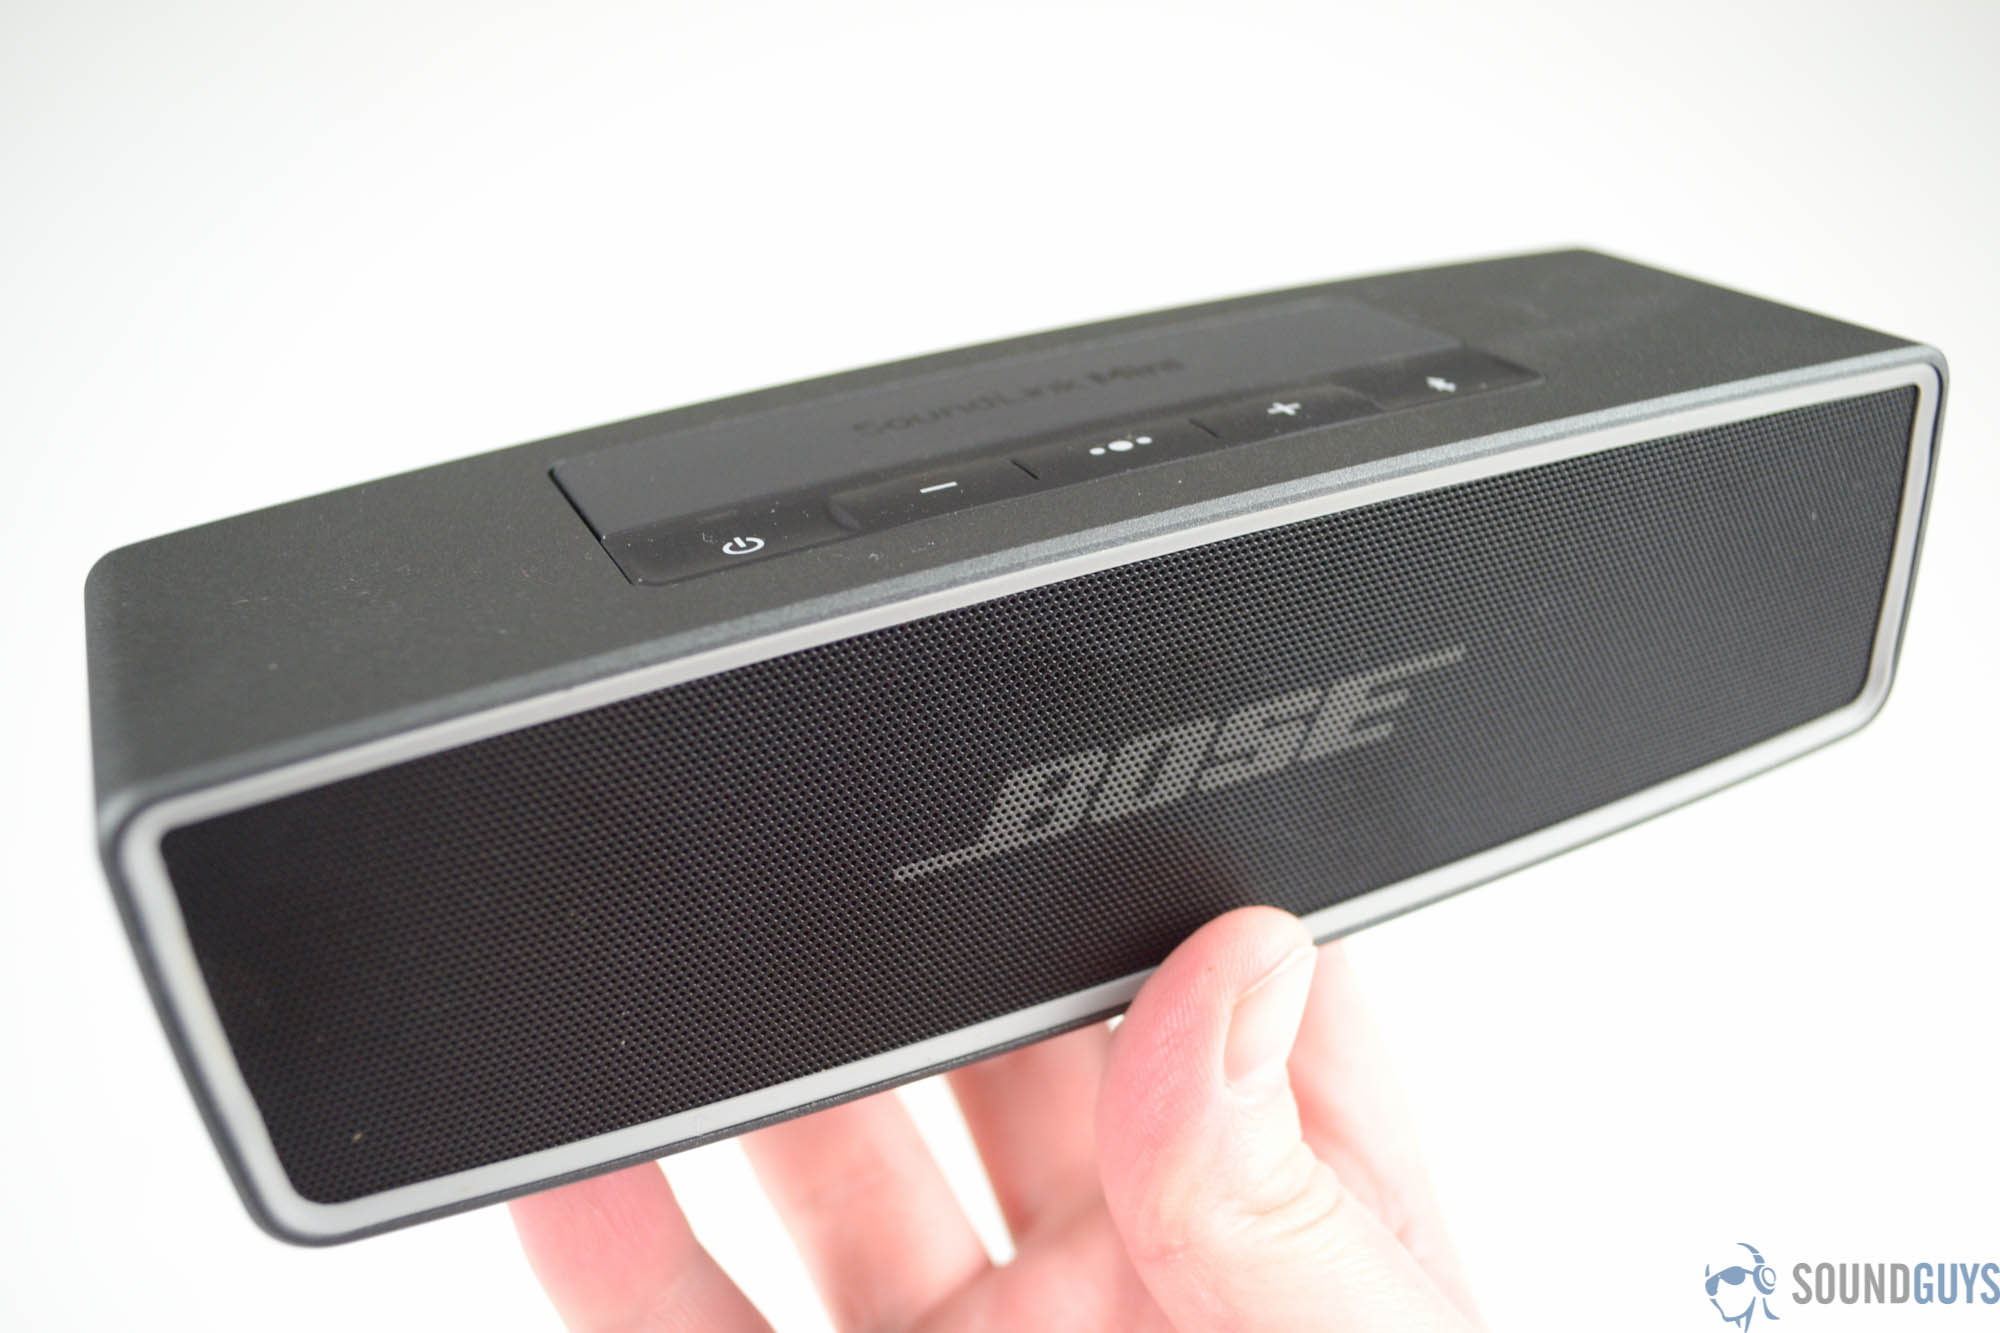 BOSE SoundLink Mini Bluetooth speaker - スピーカー・ウーファー